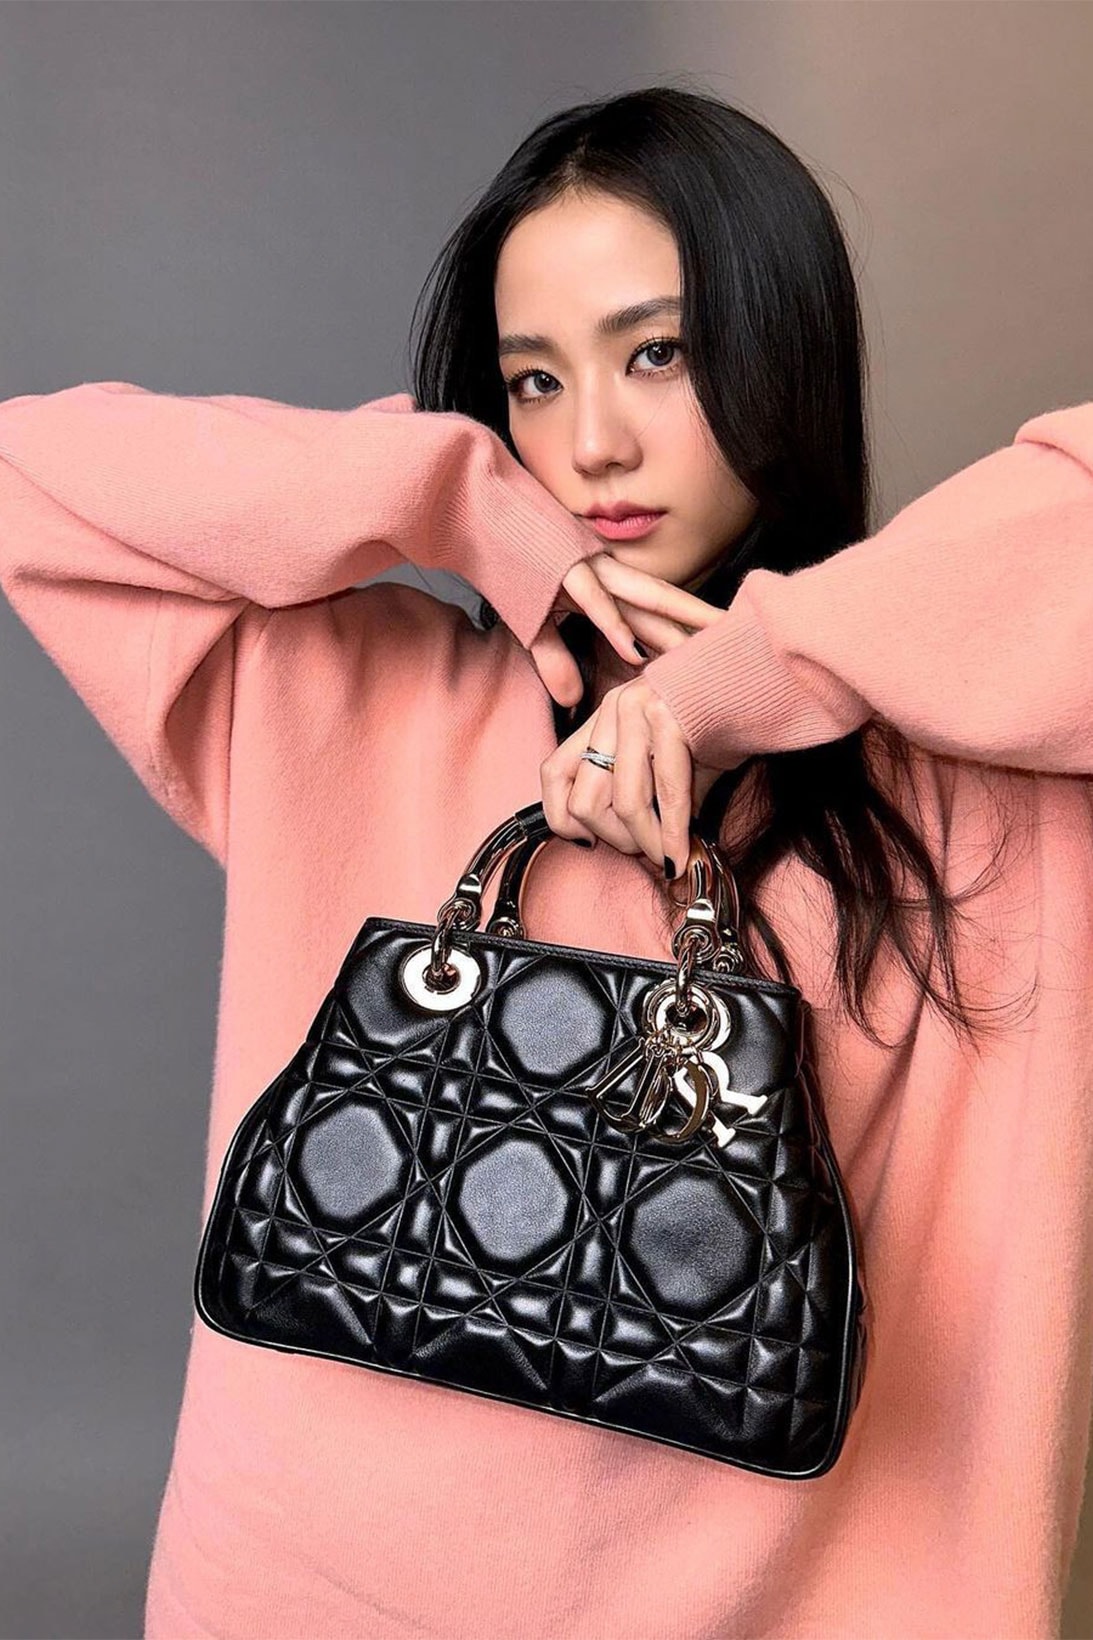 Dior Lady 95.22 New Handbag Purse BLACKPINK Jisoo Images Release Price Info